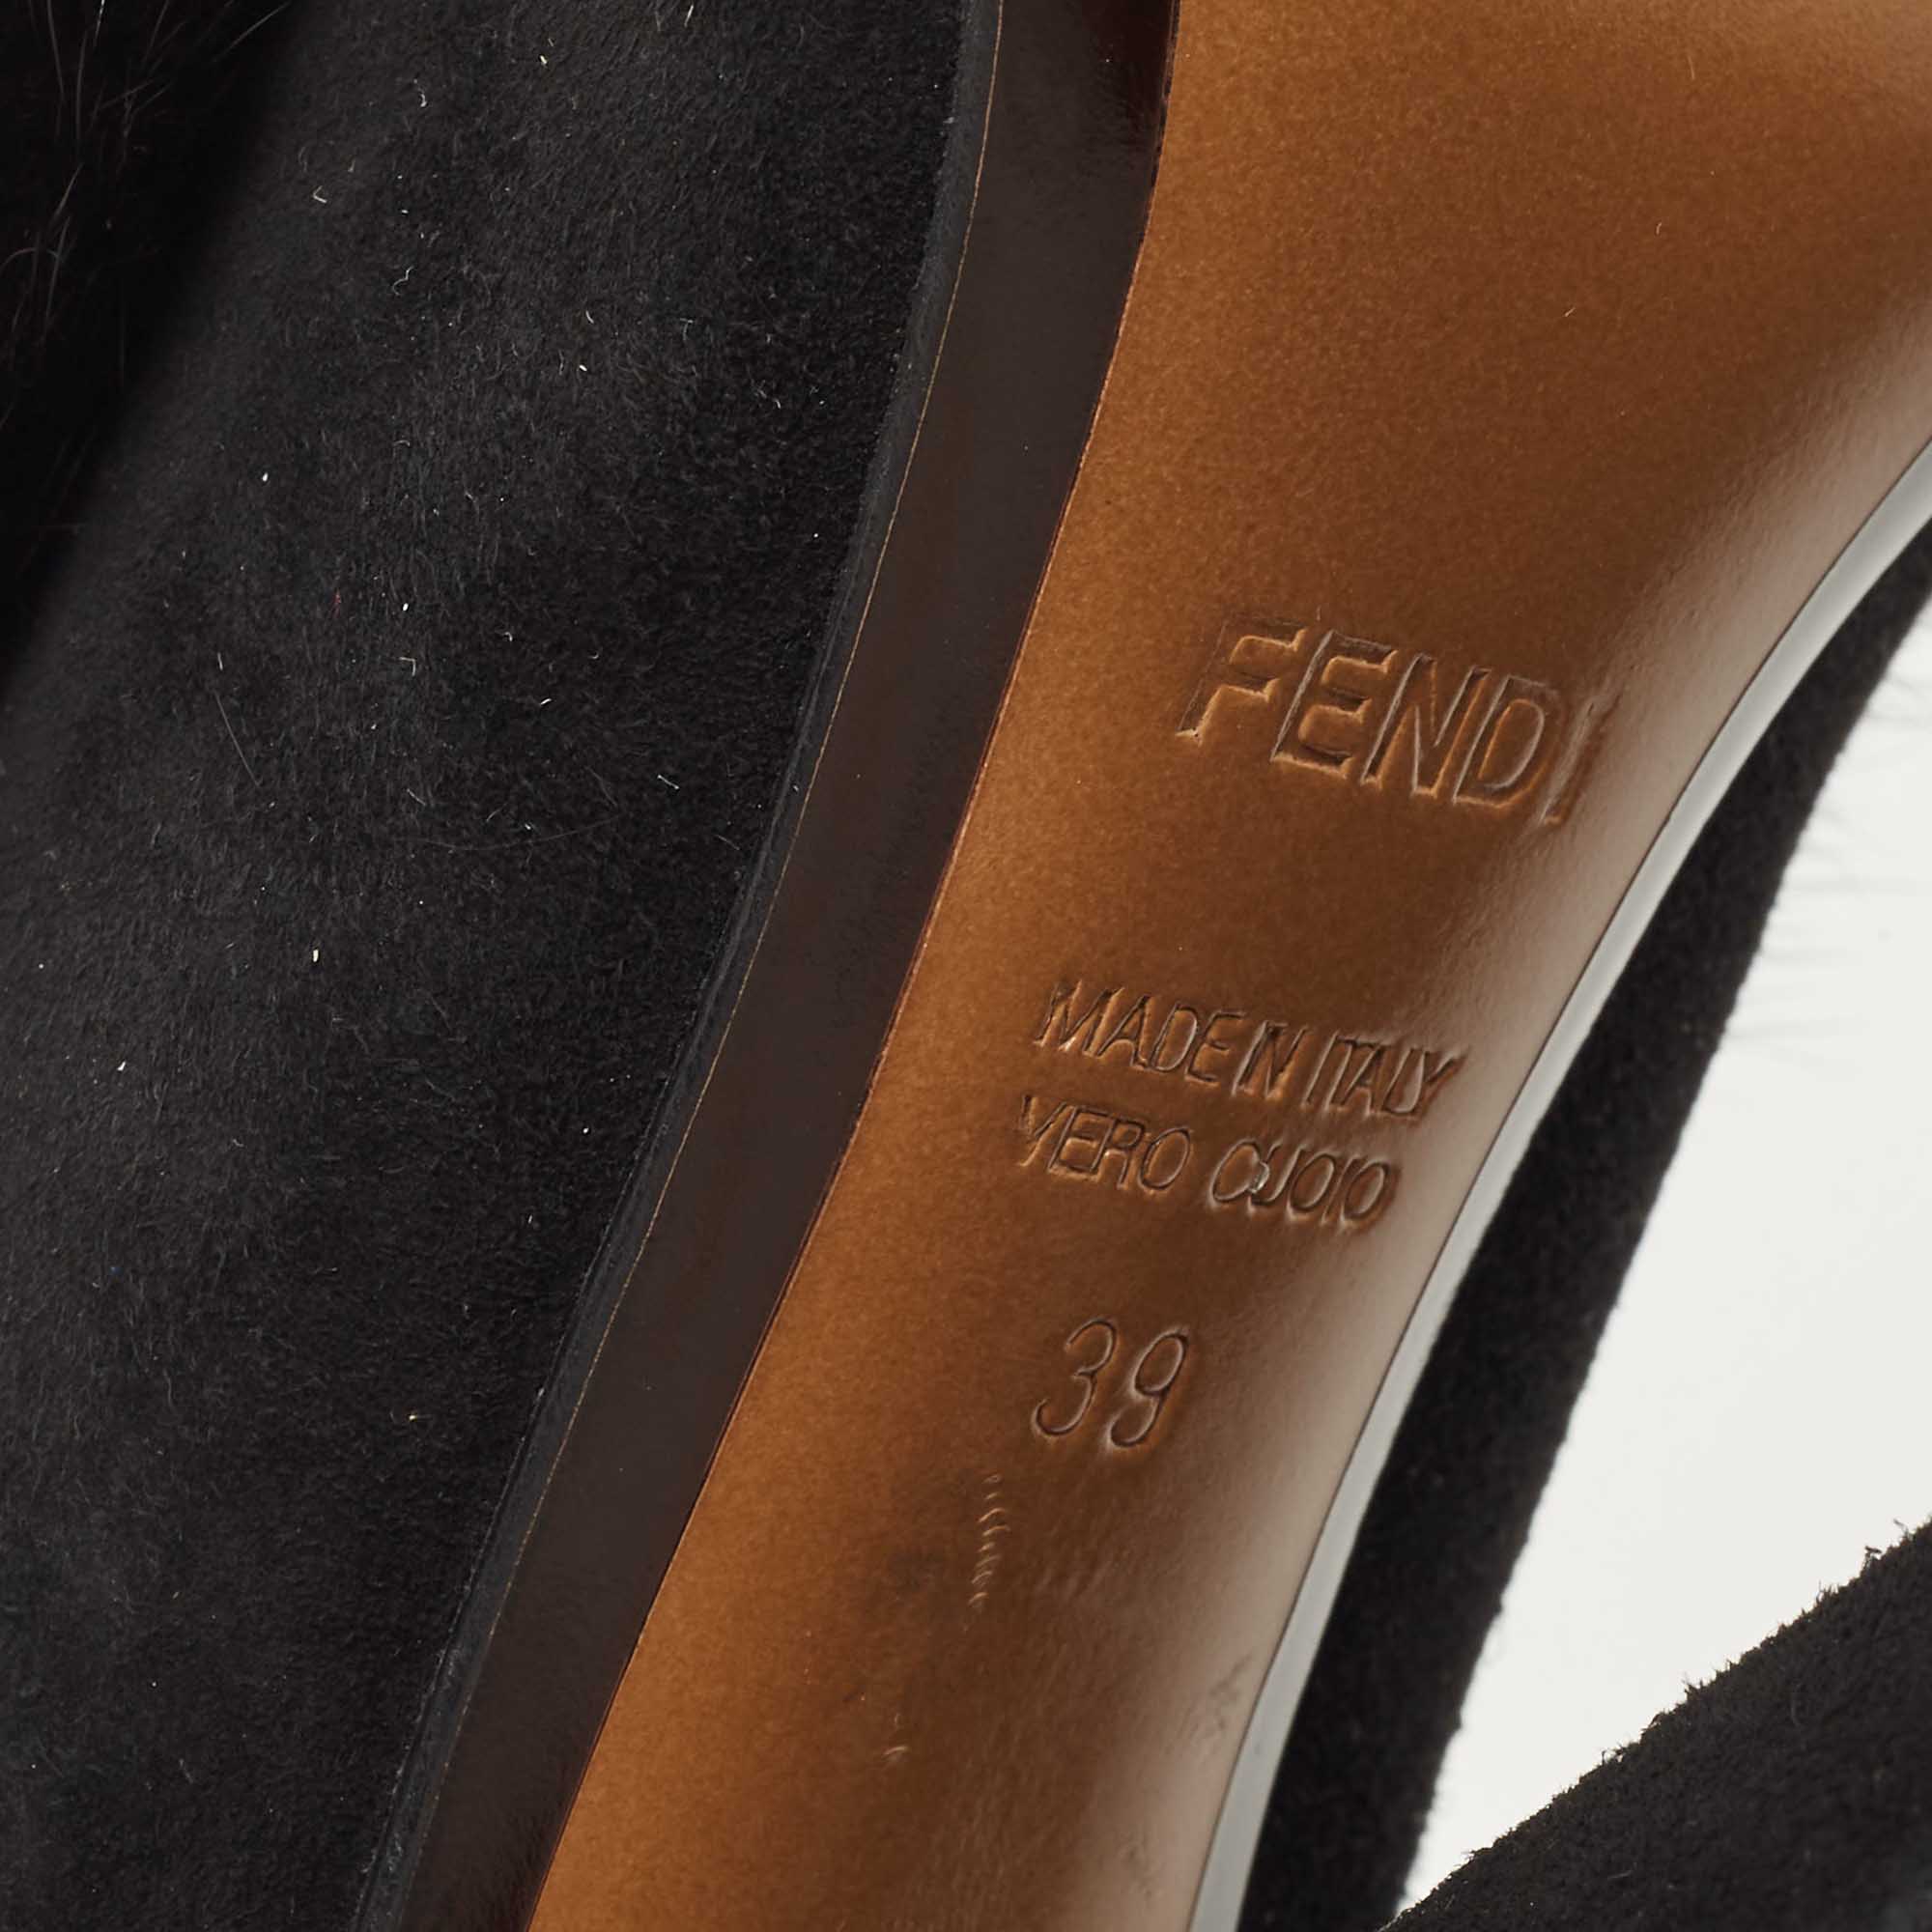 Fendi Black Suede And Fur Monster Pumps Size 39